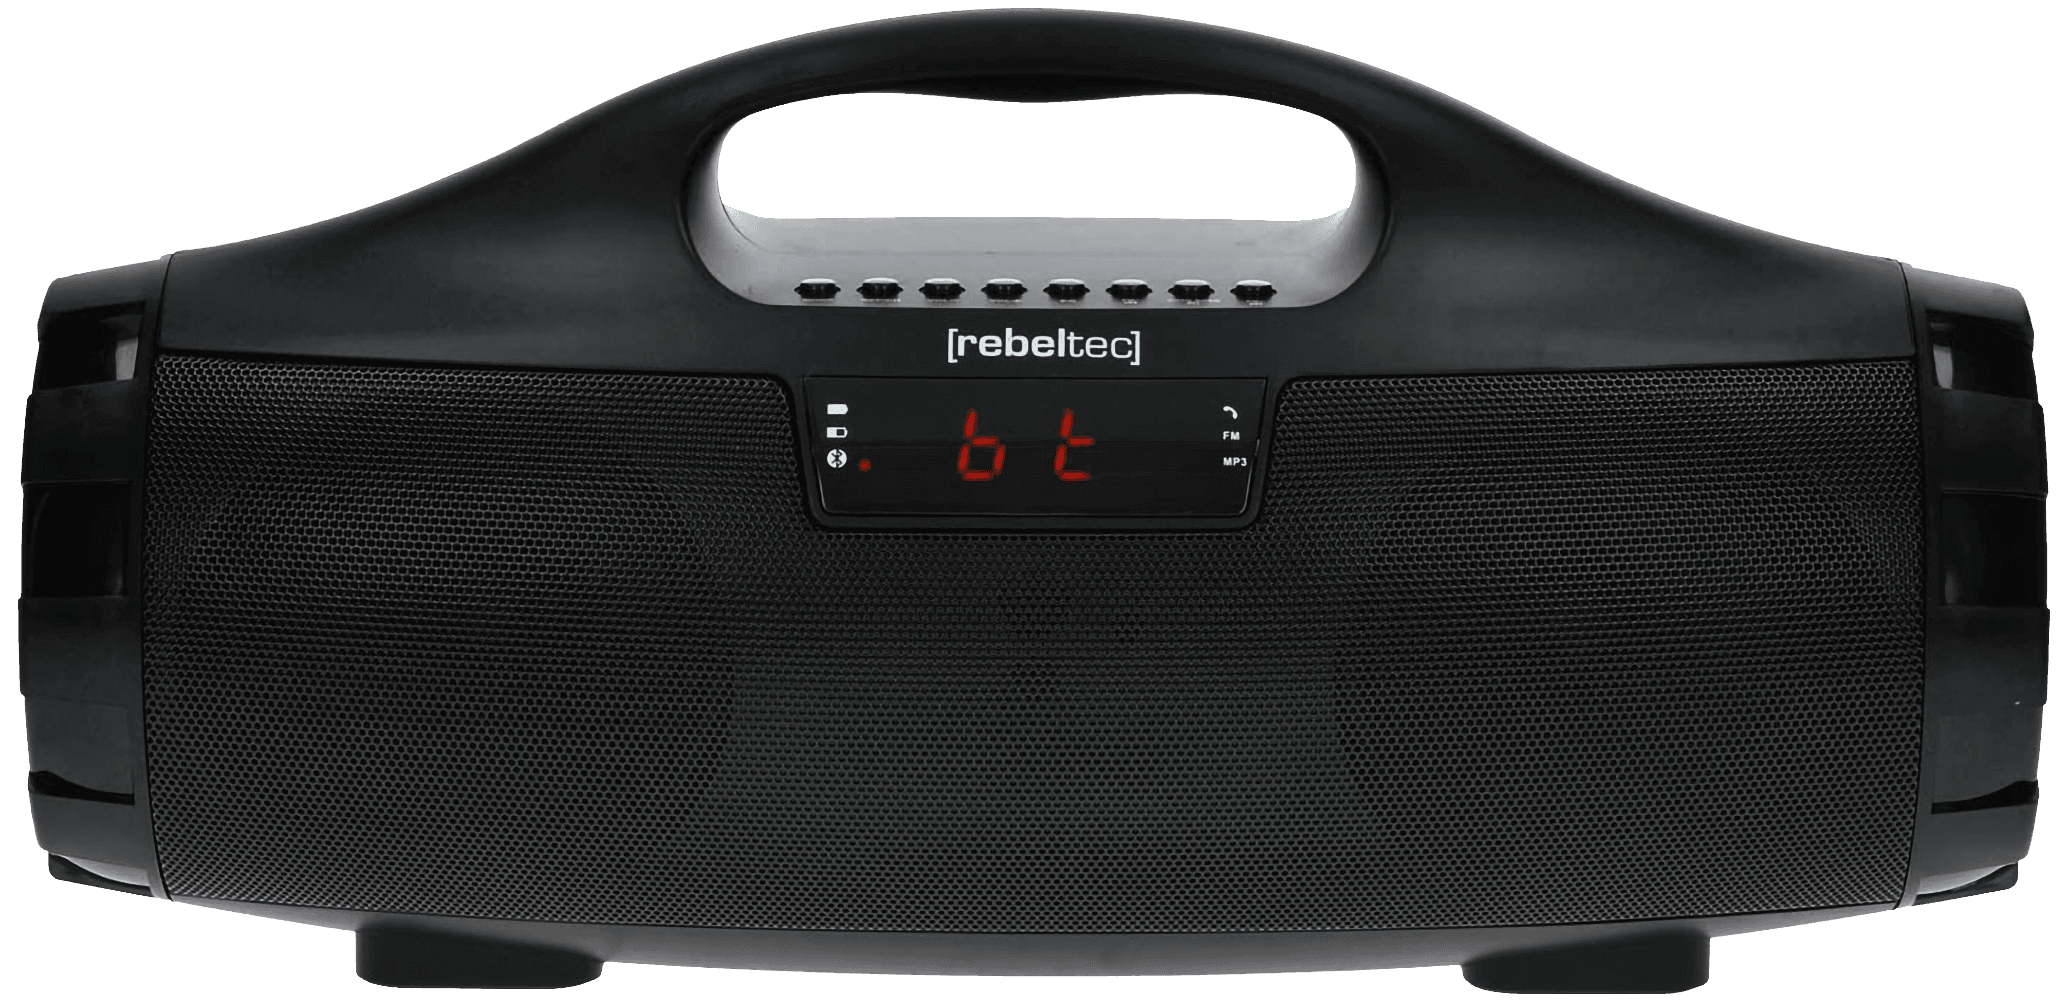 Samsung Galaxy A10 (SM-A105F) kompatibilis bluetooth hangszóró Rebeltec Soundbox 390 fekete